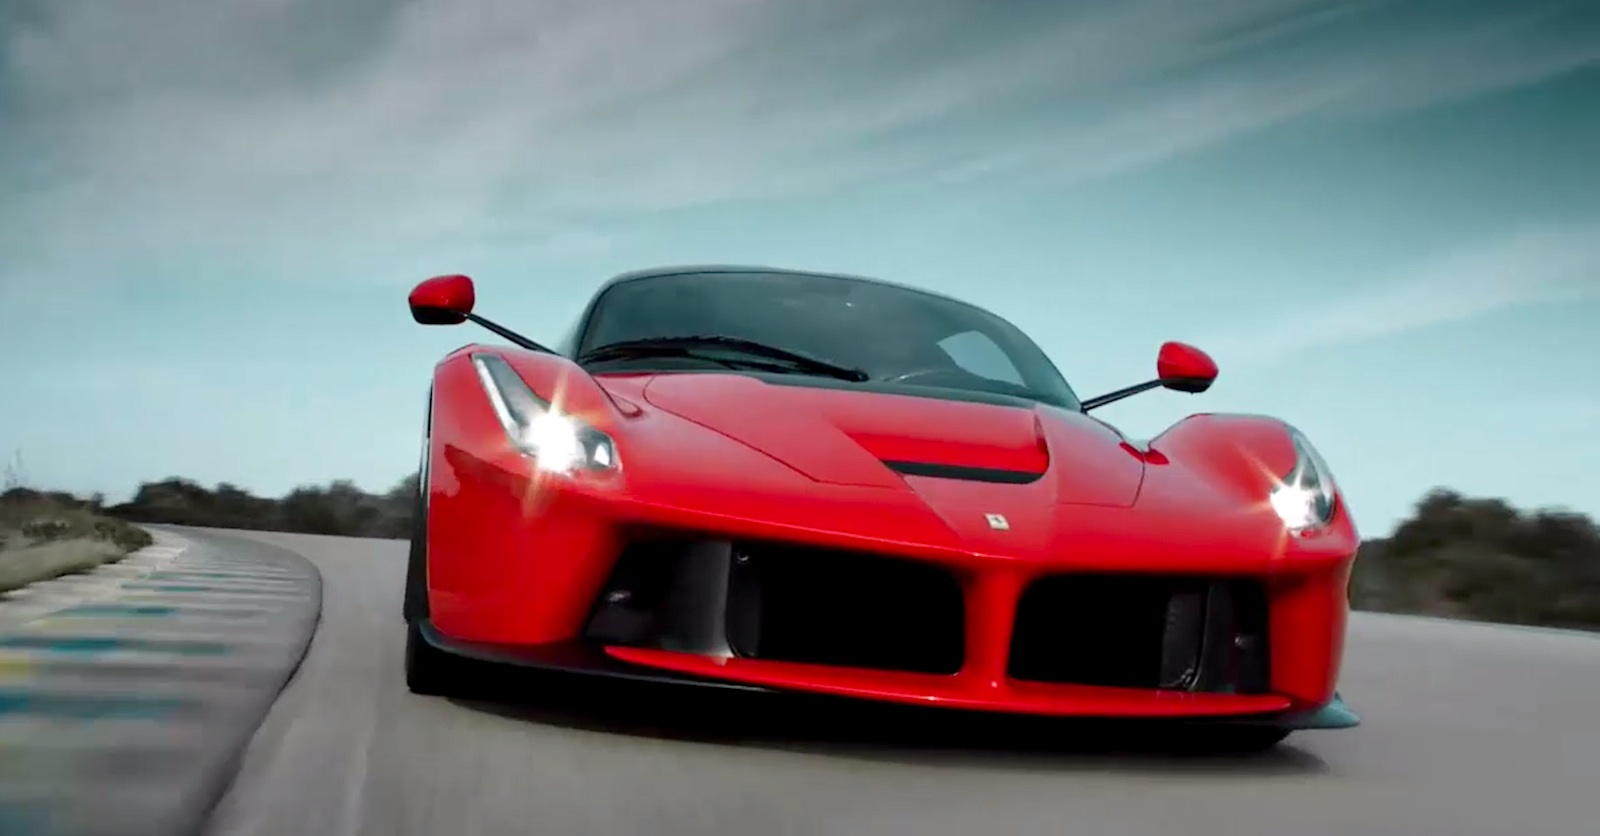 Ferrari Laferrari HD Wallpaper Image